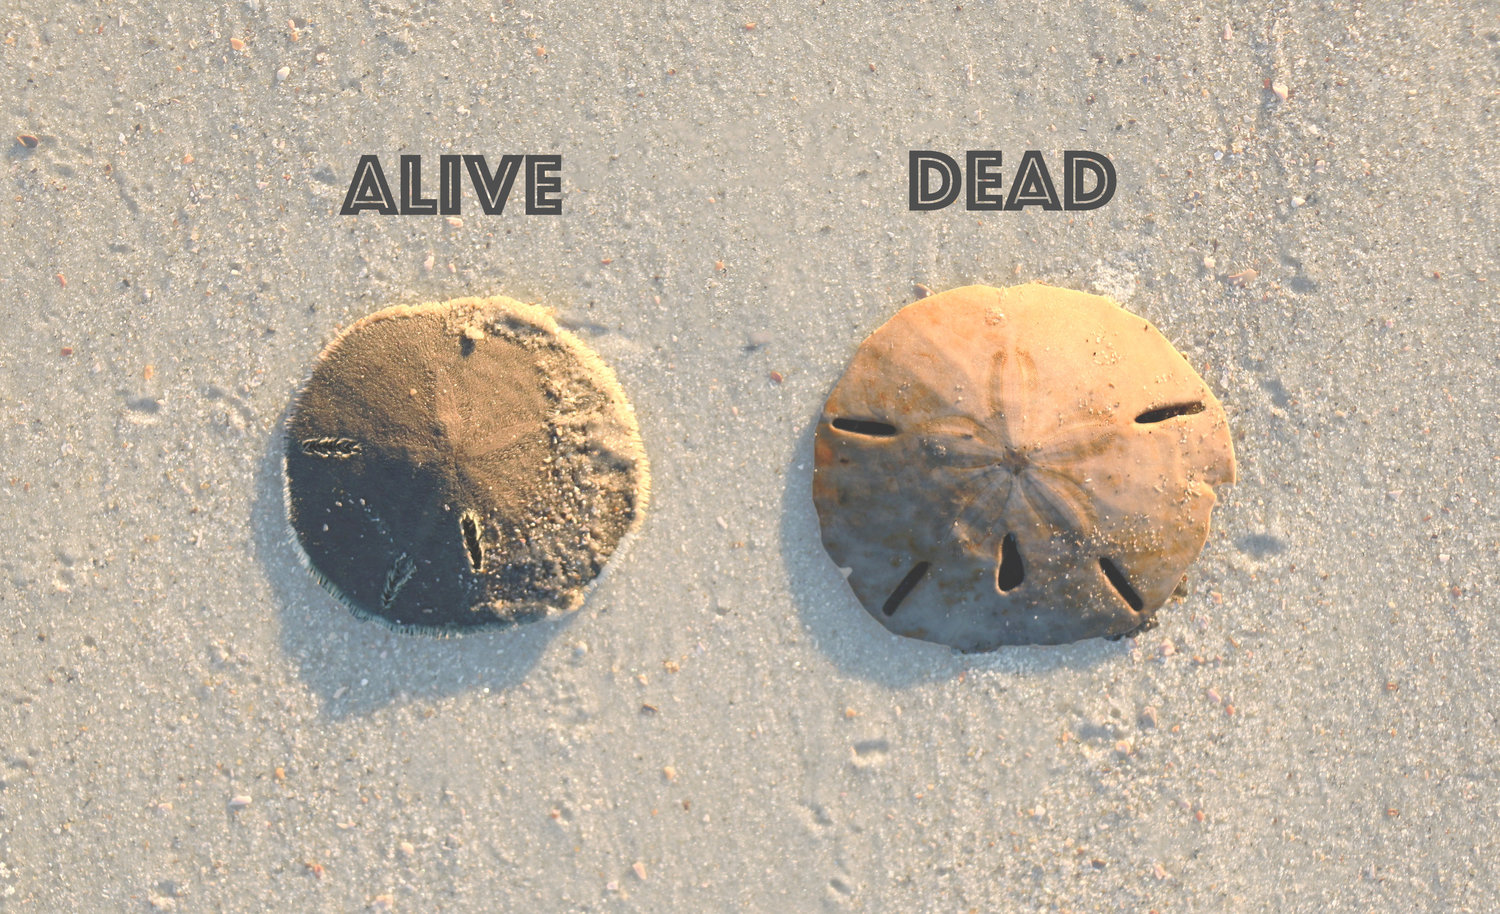 Mermaid coins or sea biscuits: Here's the scoop on sand dollars